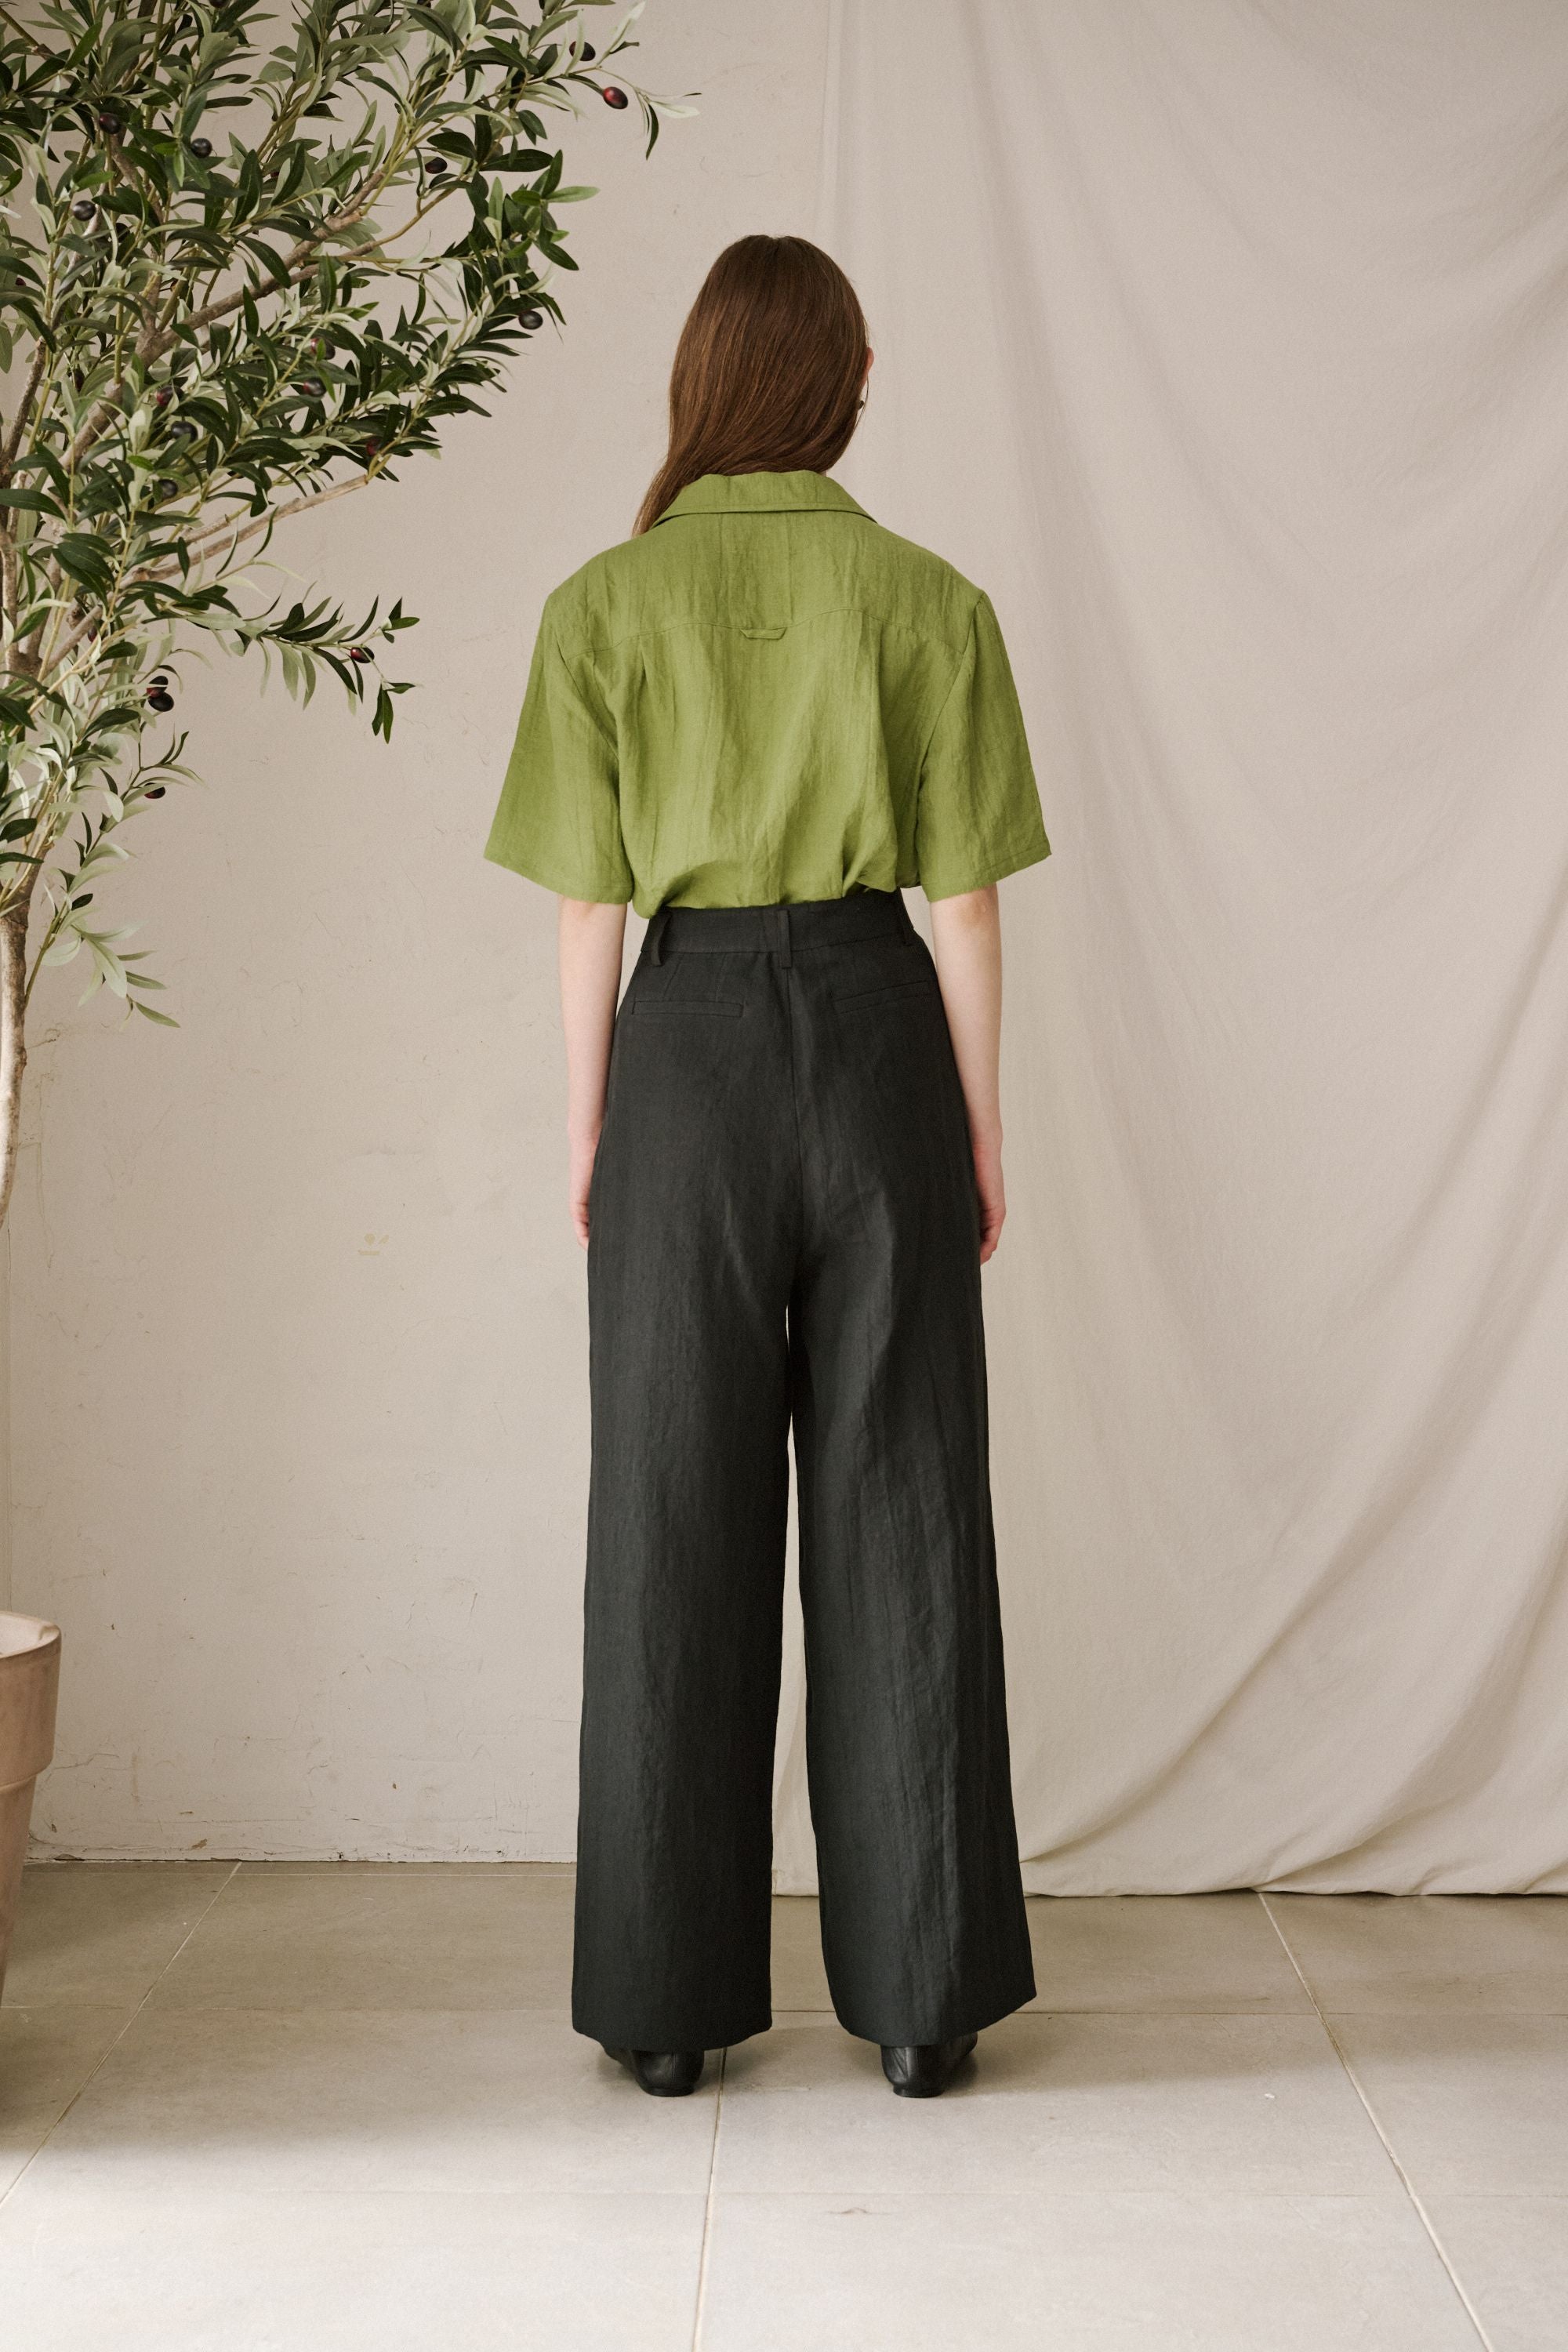 GREENEST - Linen Pocket Shirt | Olive, buy at DOORS NYC